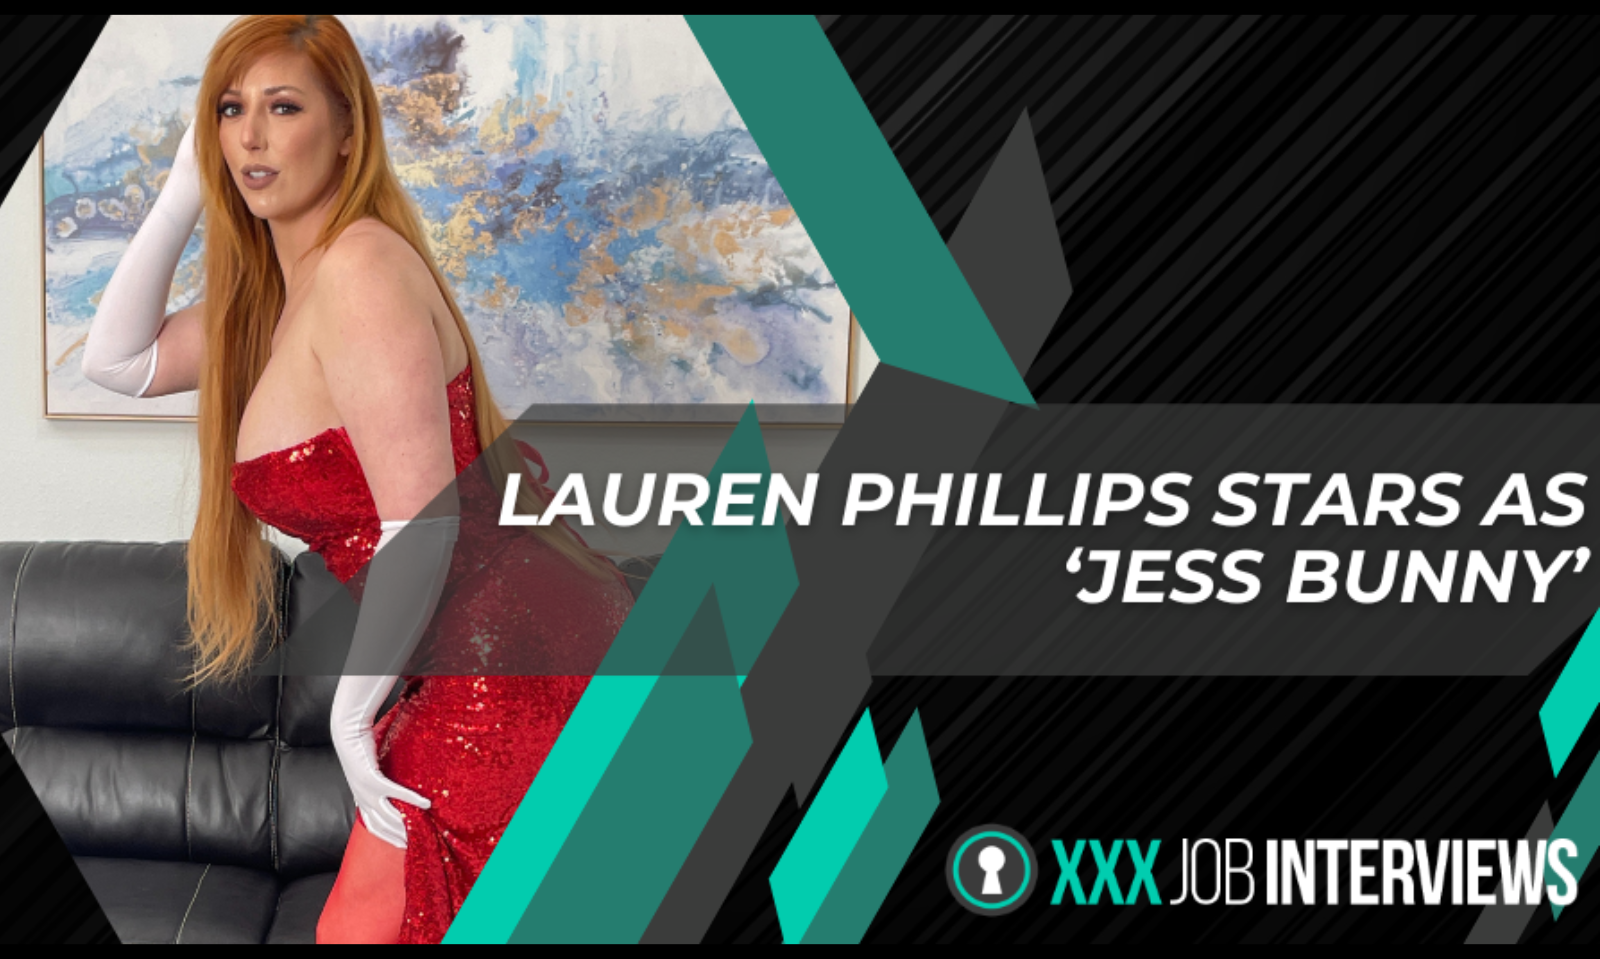 Lauren Phillips Stars in New XXXJobInterviews.com Scene